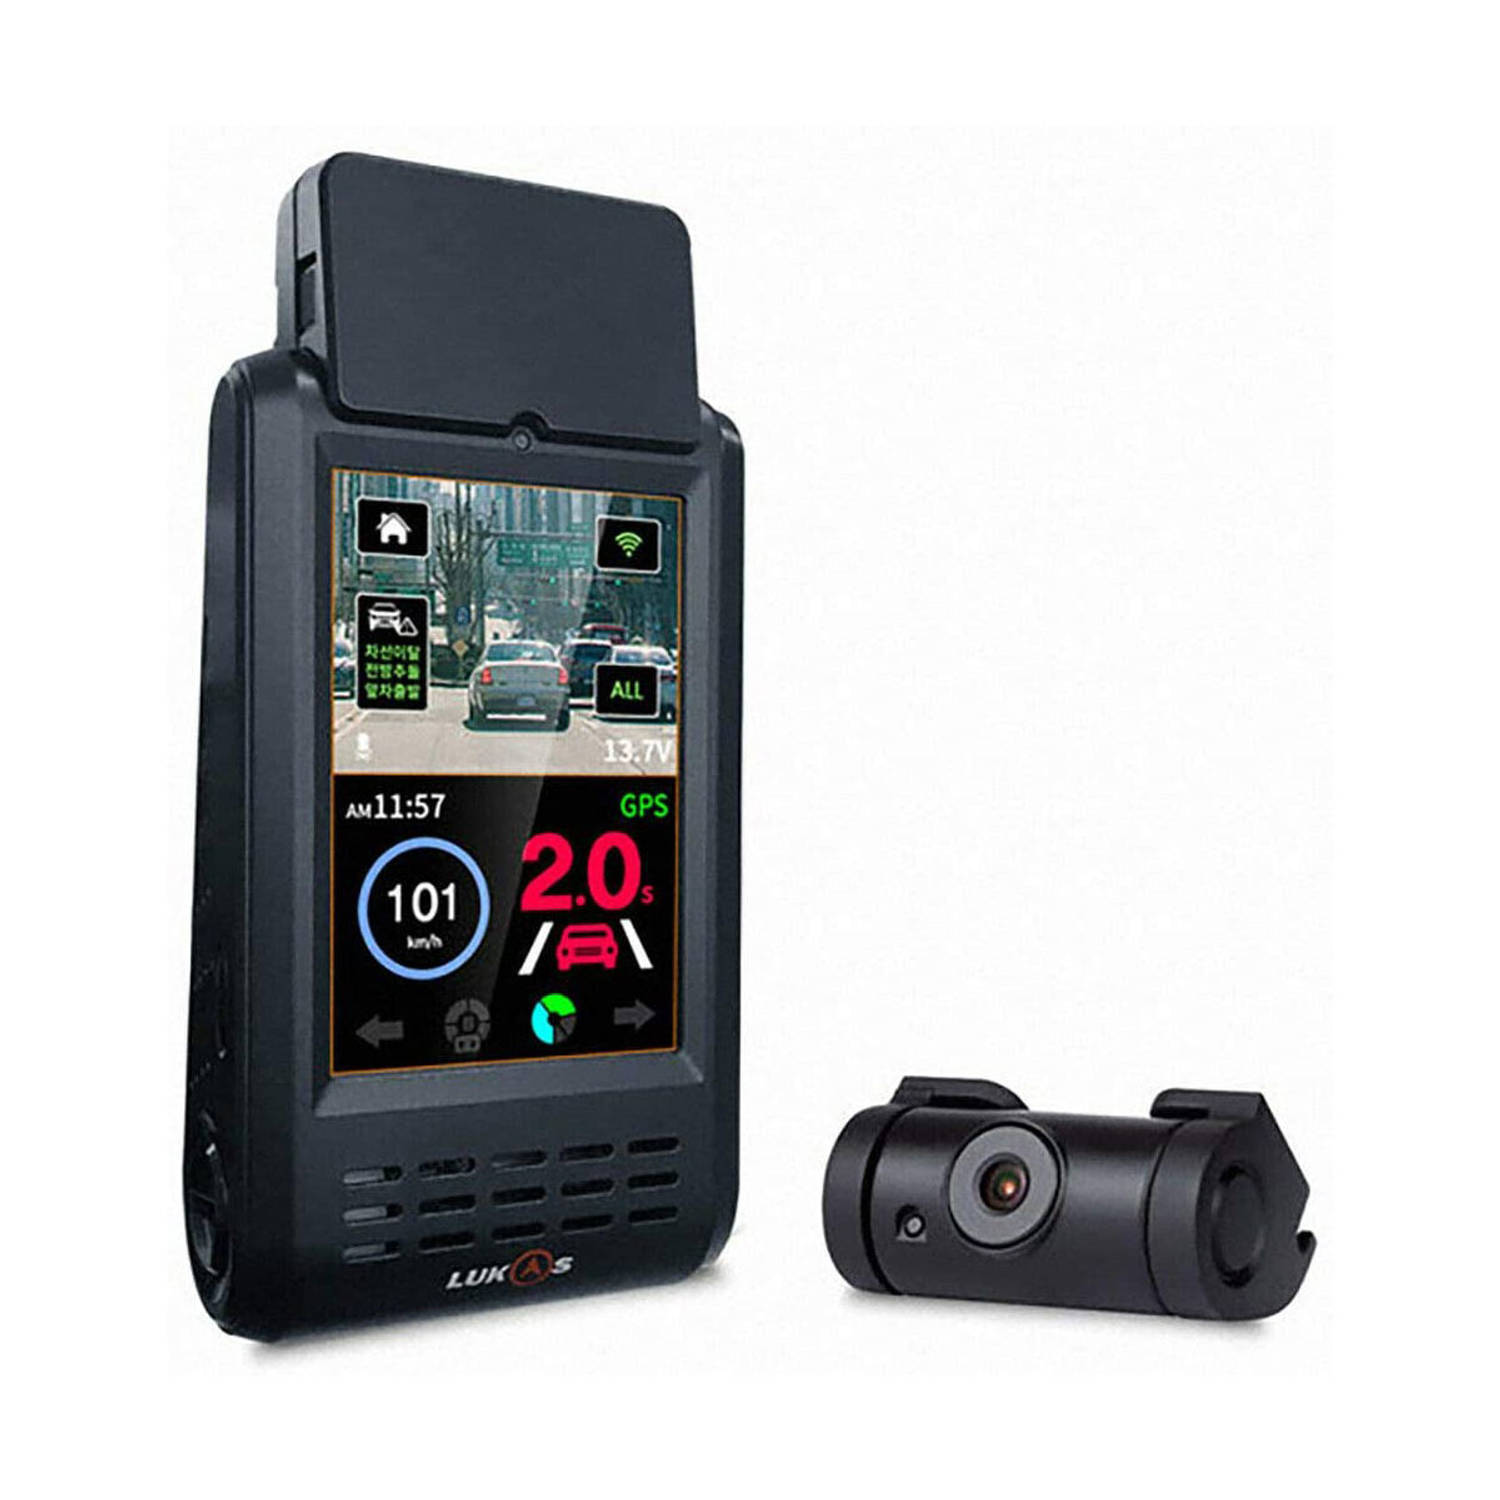 Lukas K900 Quadhd Touch Wifi Gps 32gb Dashcam